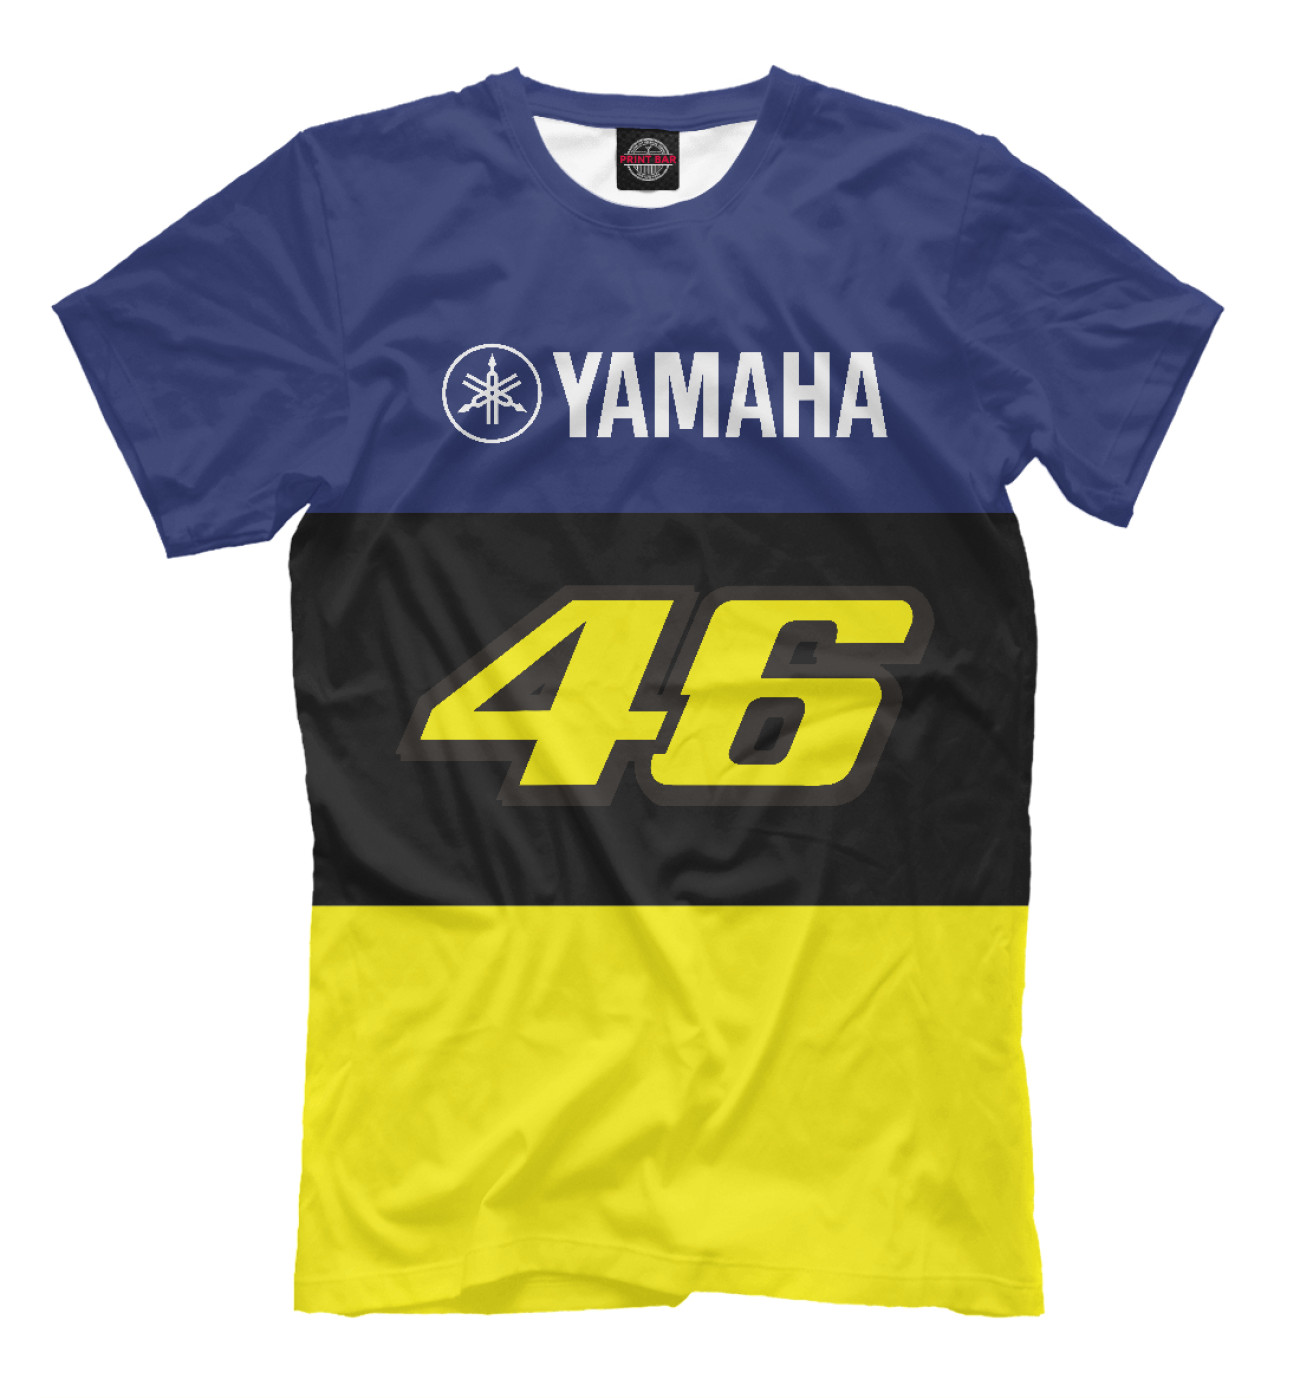 Мужская Футболка Yamaha VR46, артикул: YAM-234269-fut-2